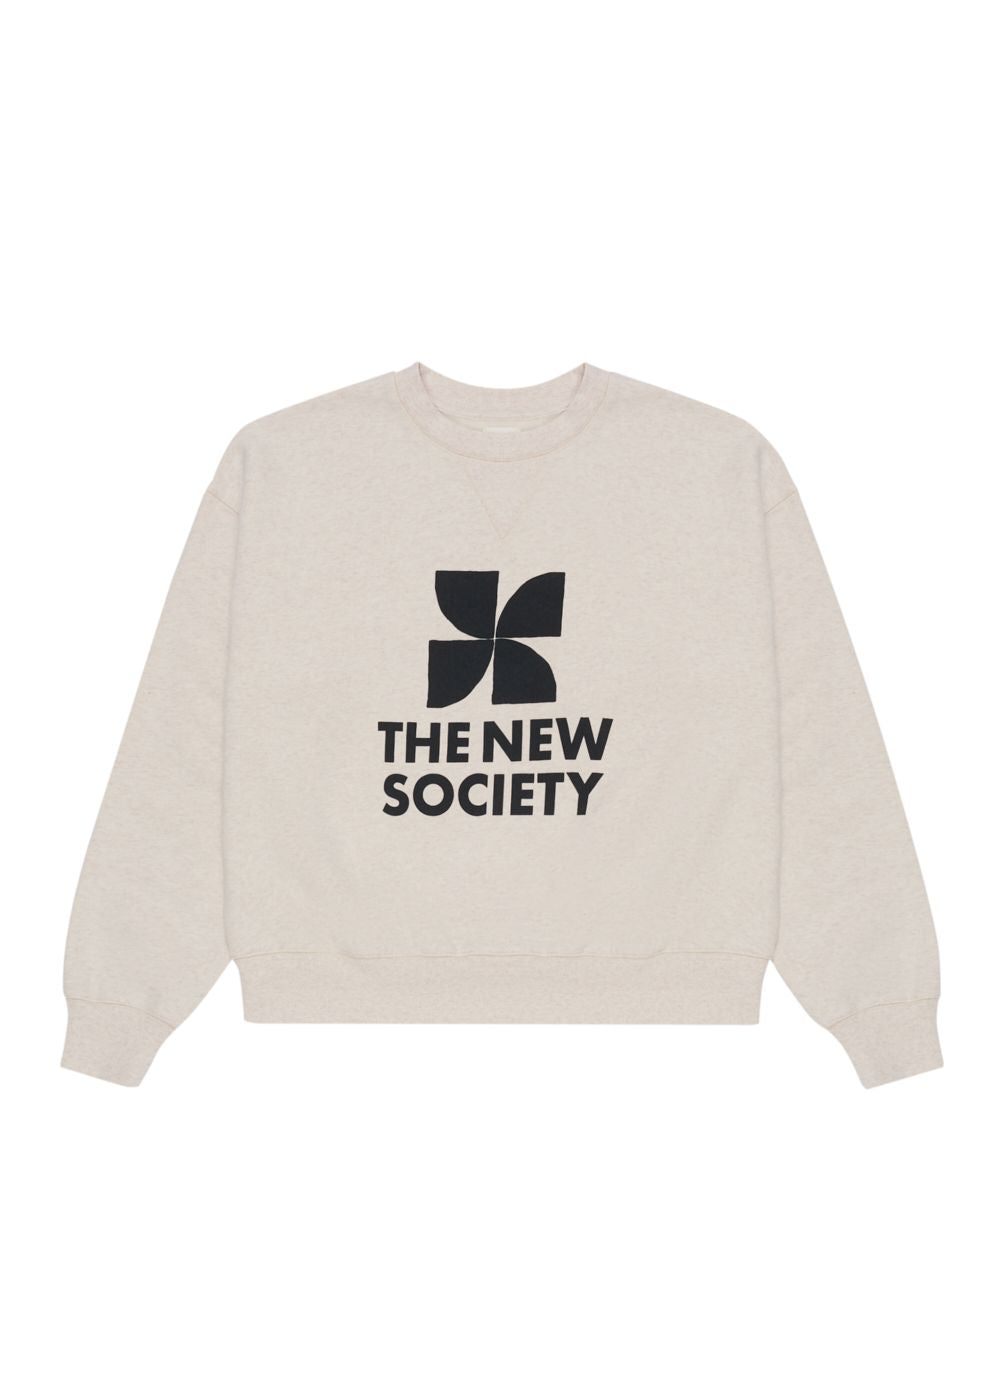 The New Society - Ontario women's BCI cotton sweatshirt